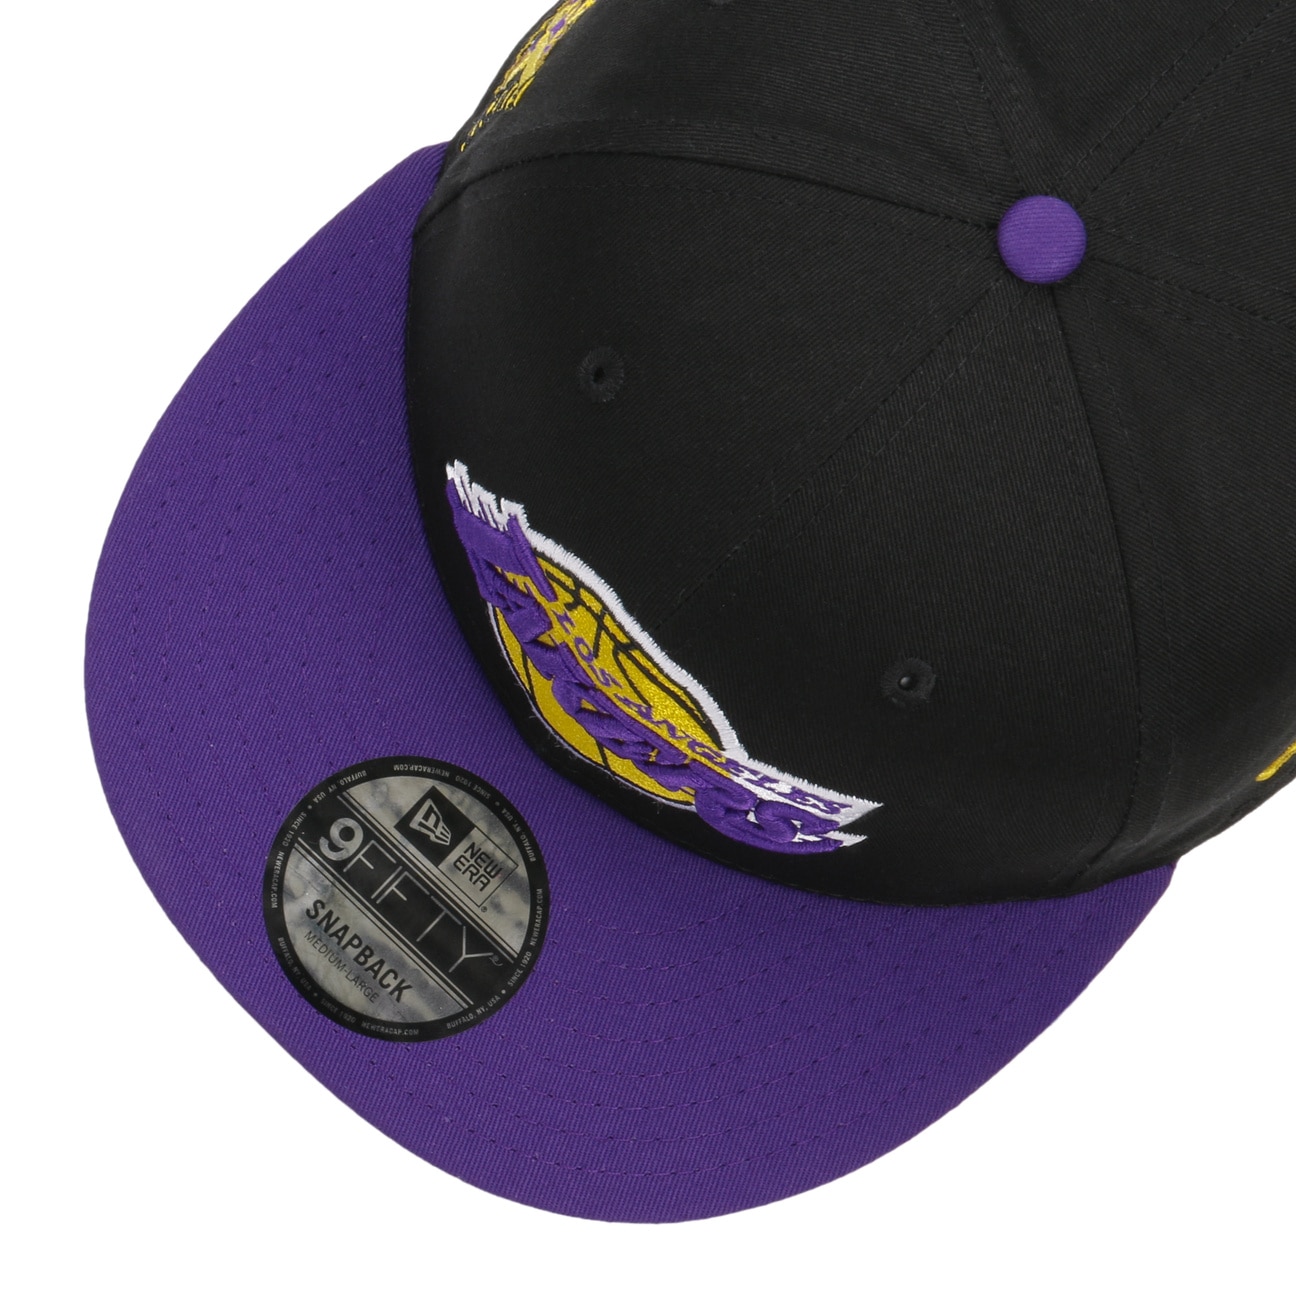 New Era Los Angeles Lakers 9FIFTY Black Snapback Hat